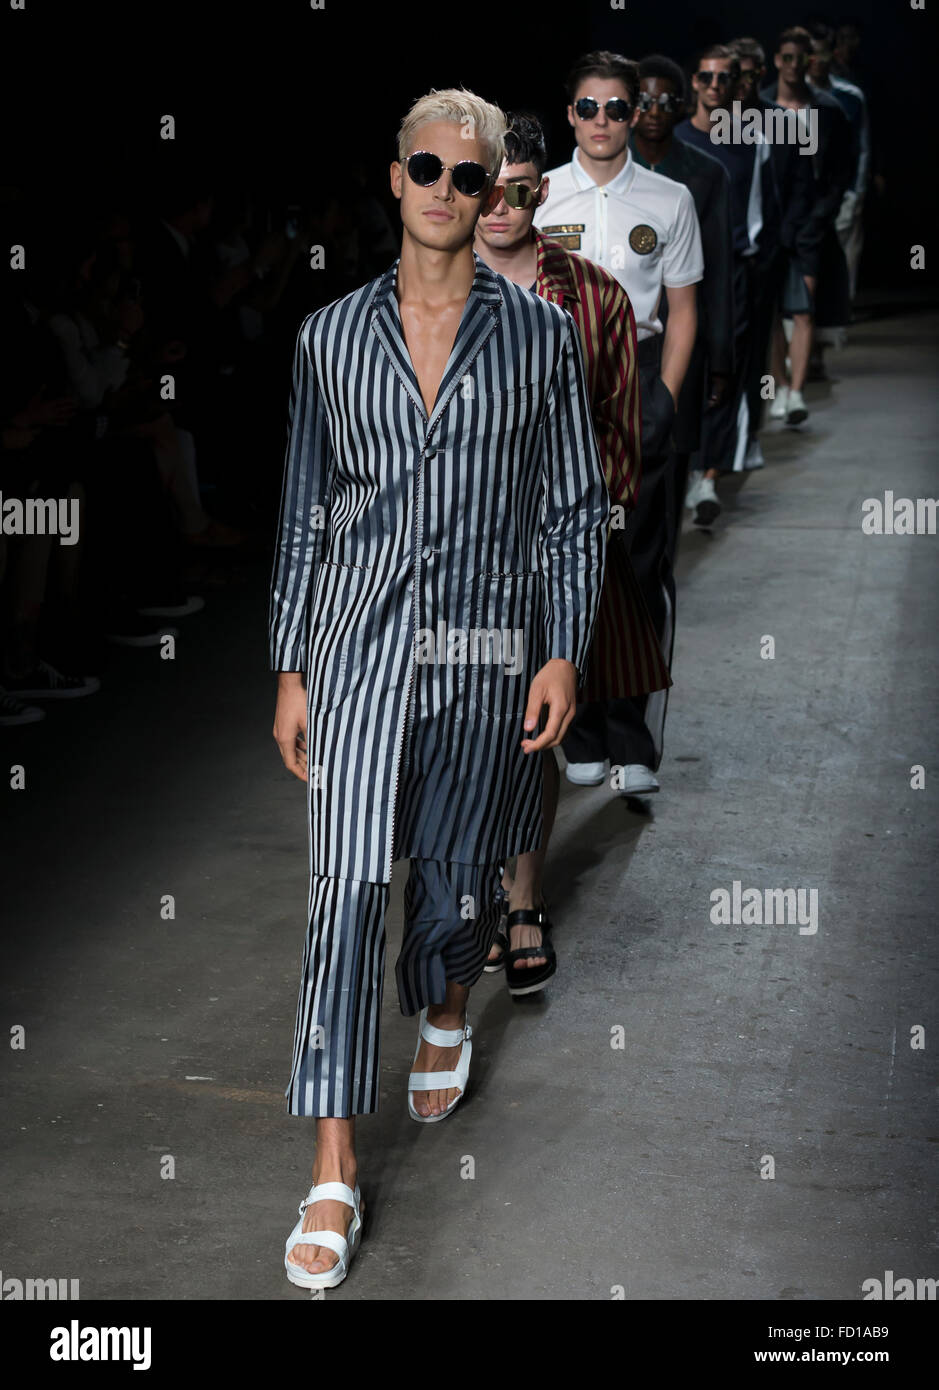 NEW YORK, NY - JULY 14, 2015: Brett MacDonnell walks the runway during the Concept Korea show at NYFW Men’s S/S 2016 Stock Photo